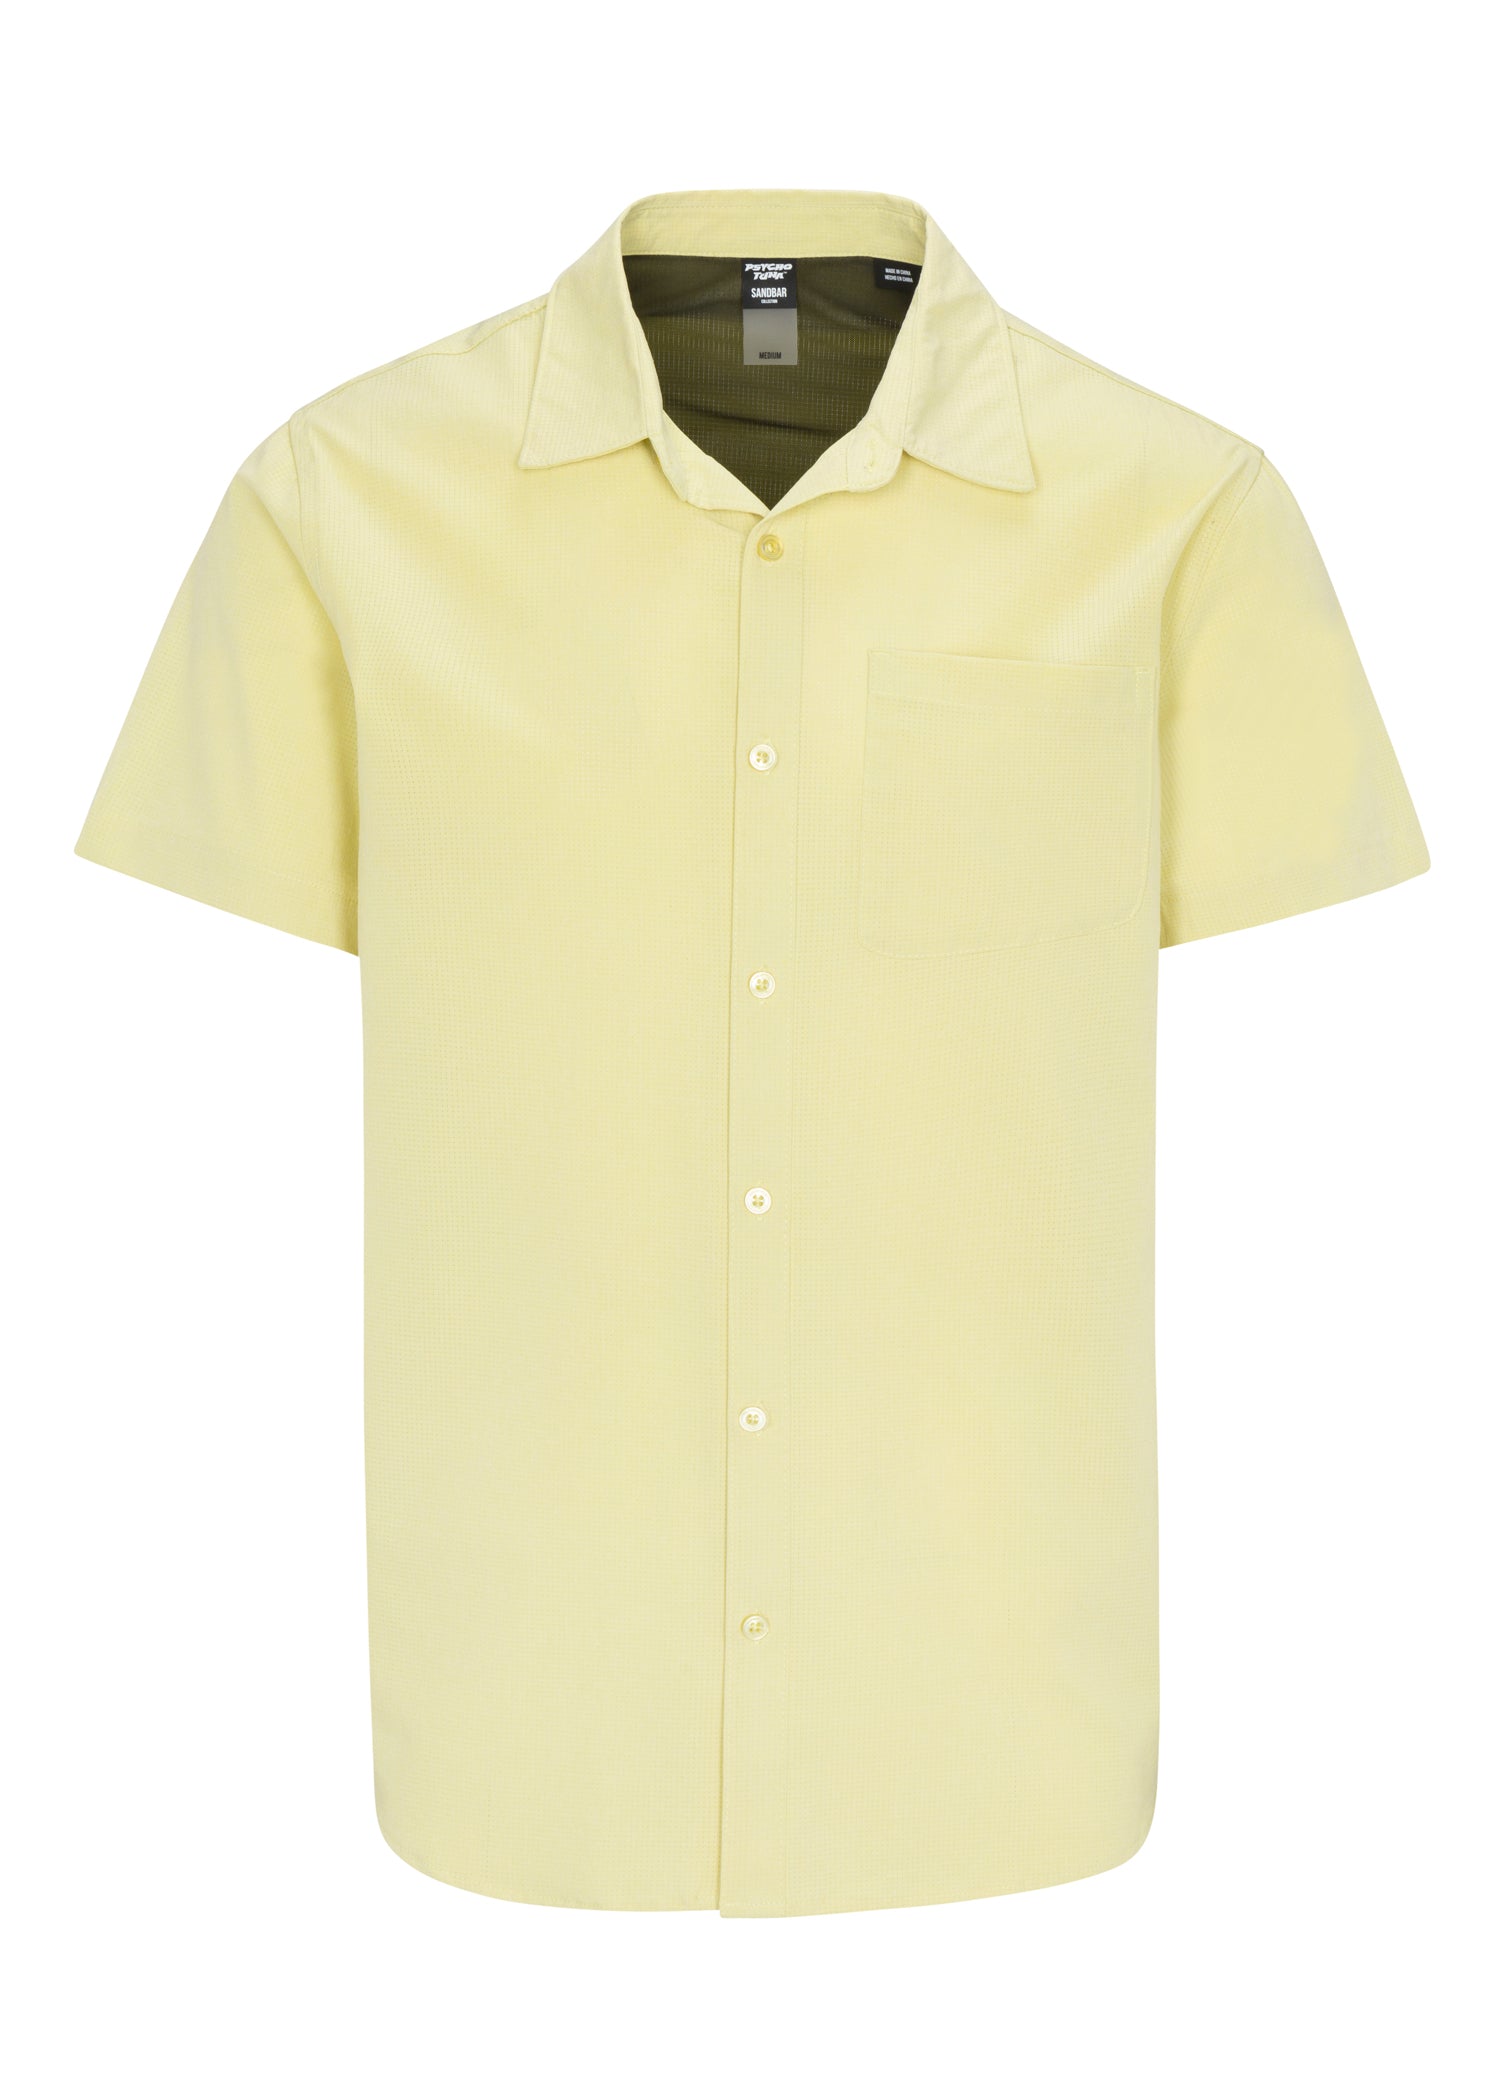 Mens Shirts Short Sleeve Floral Hawaiian Button Up Shirt 4 Way Stretch  Casual Fishing Shirts Classic Woven Shirts